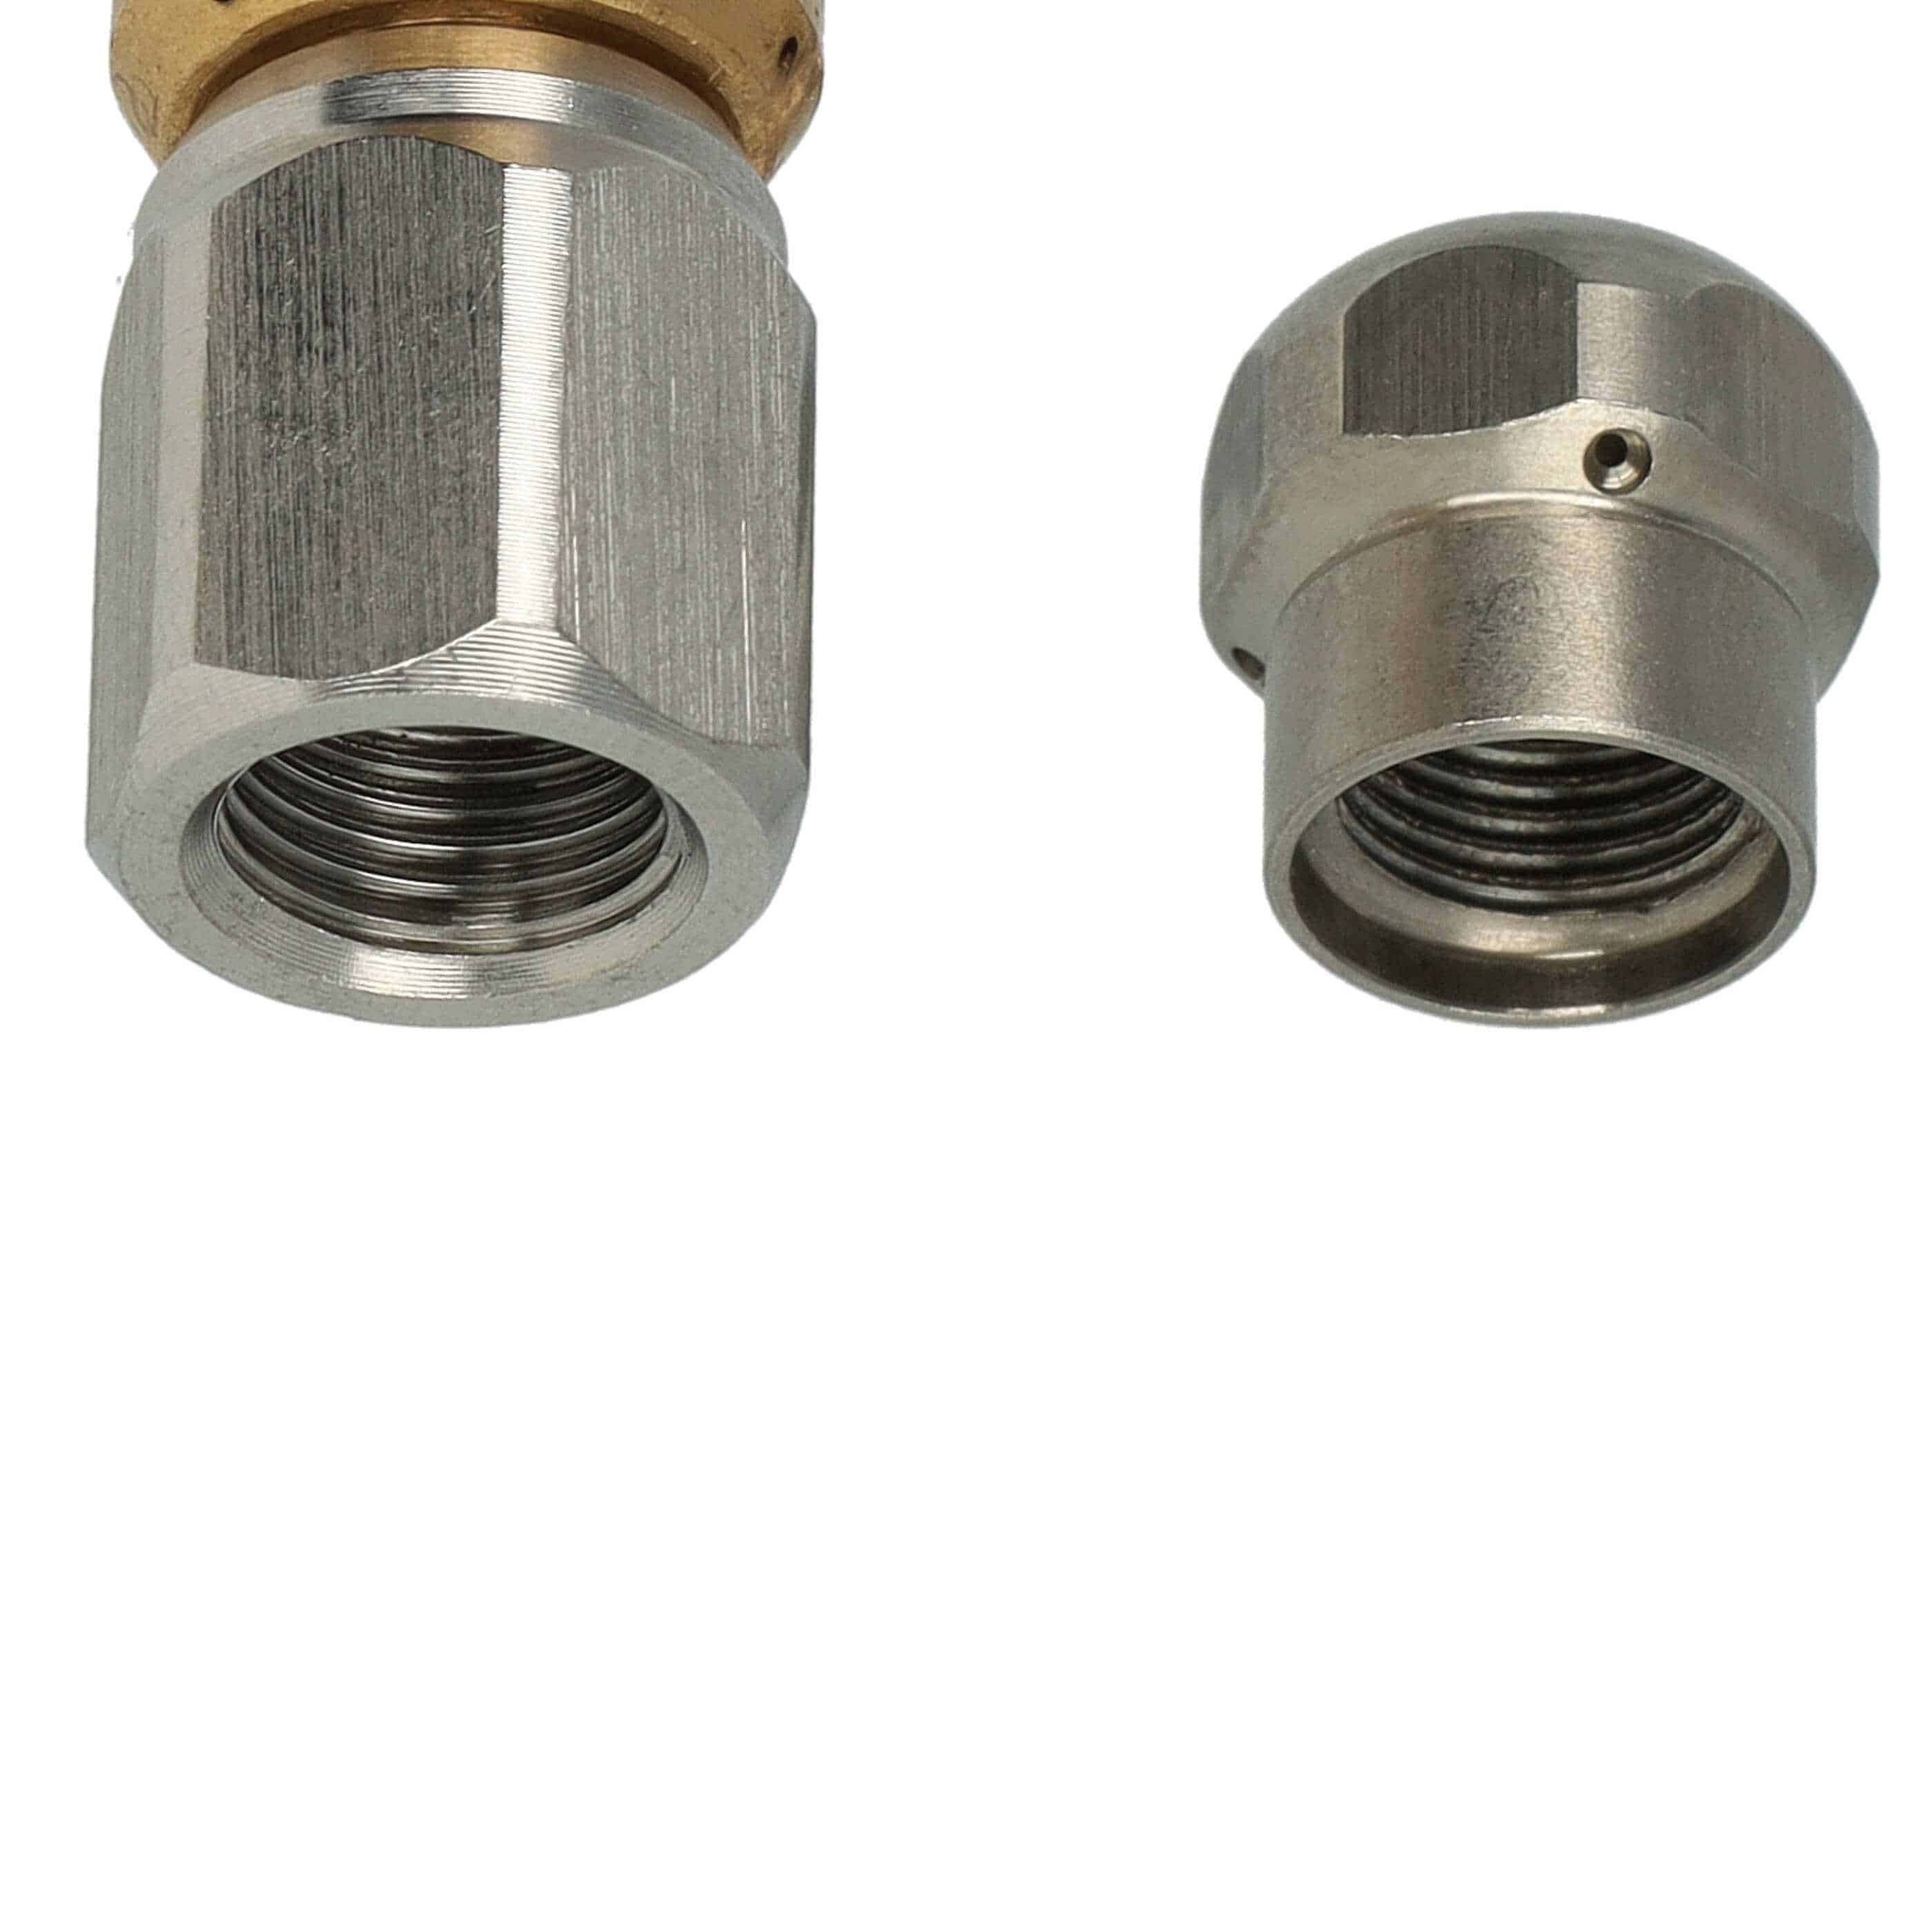 2x boquillas limpieza tuberías reemplaza Kränzle KNF045 - acero inoxidable, rígida + giratoria